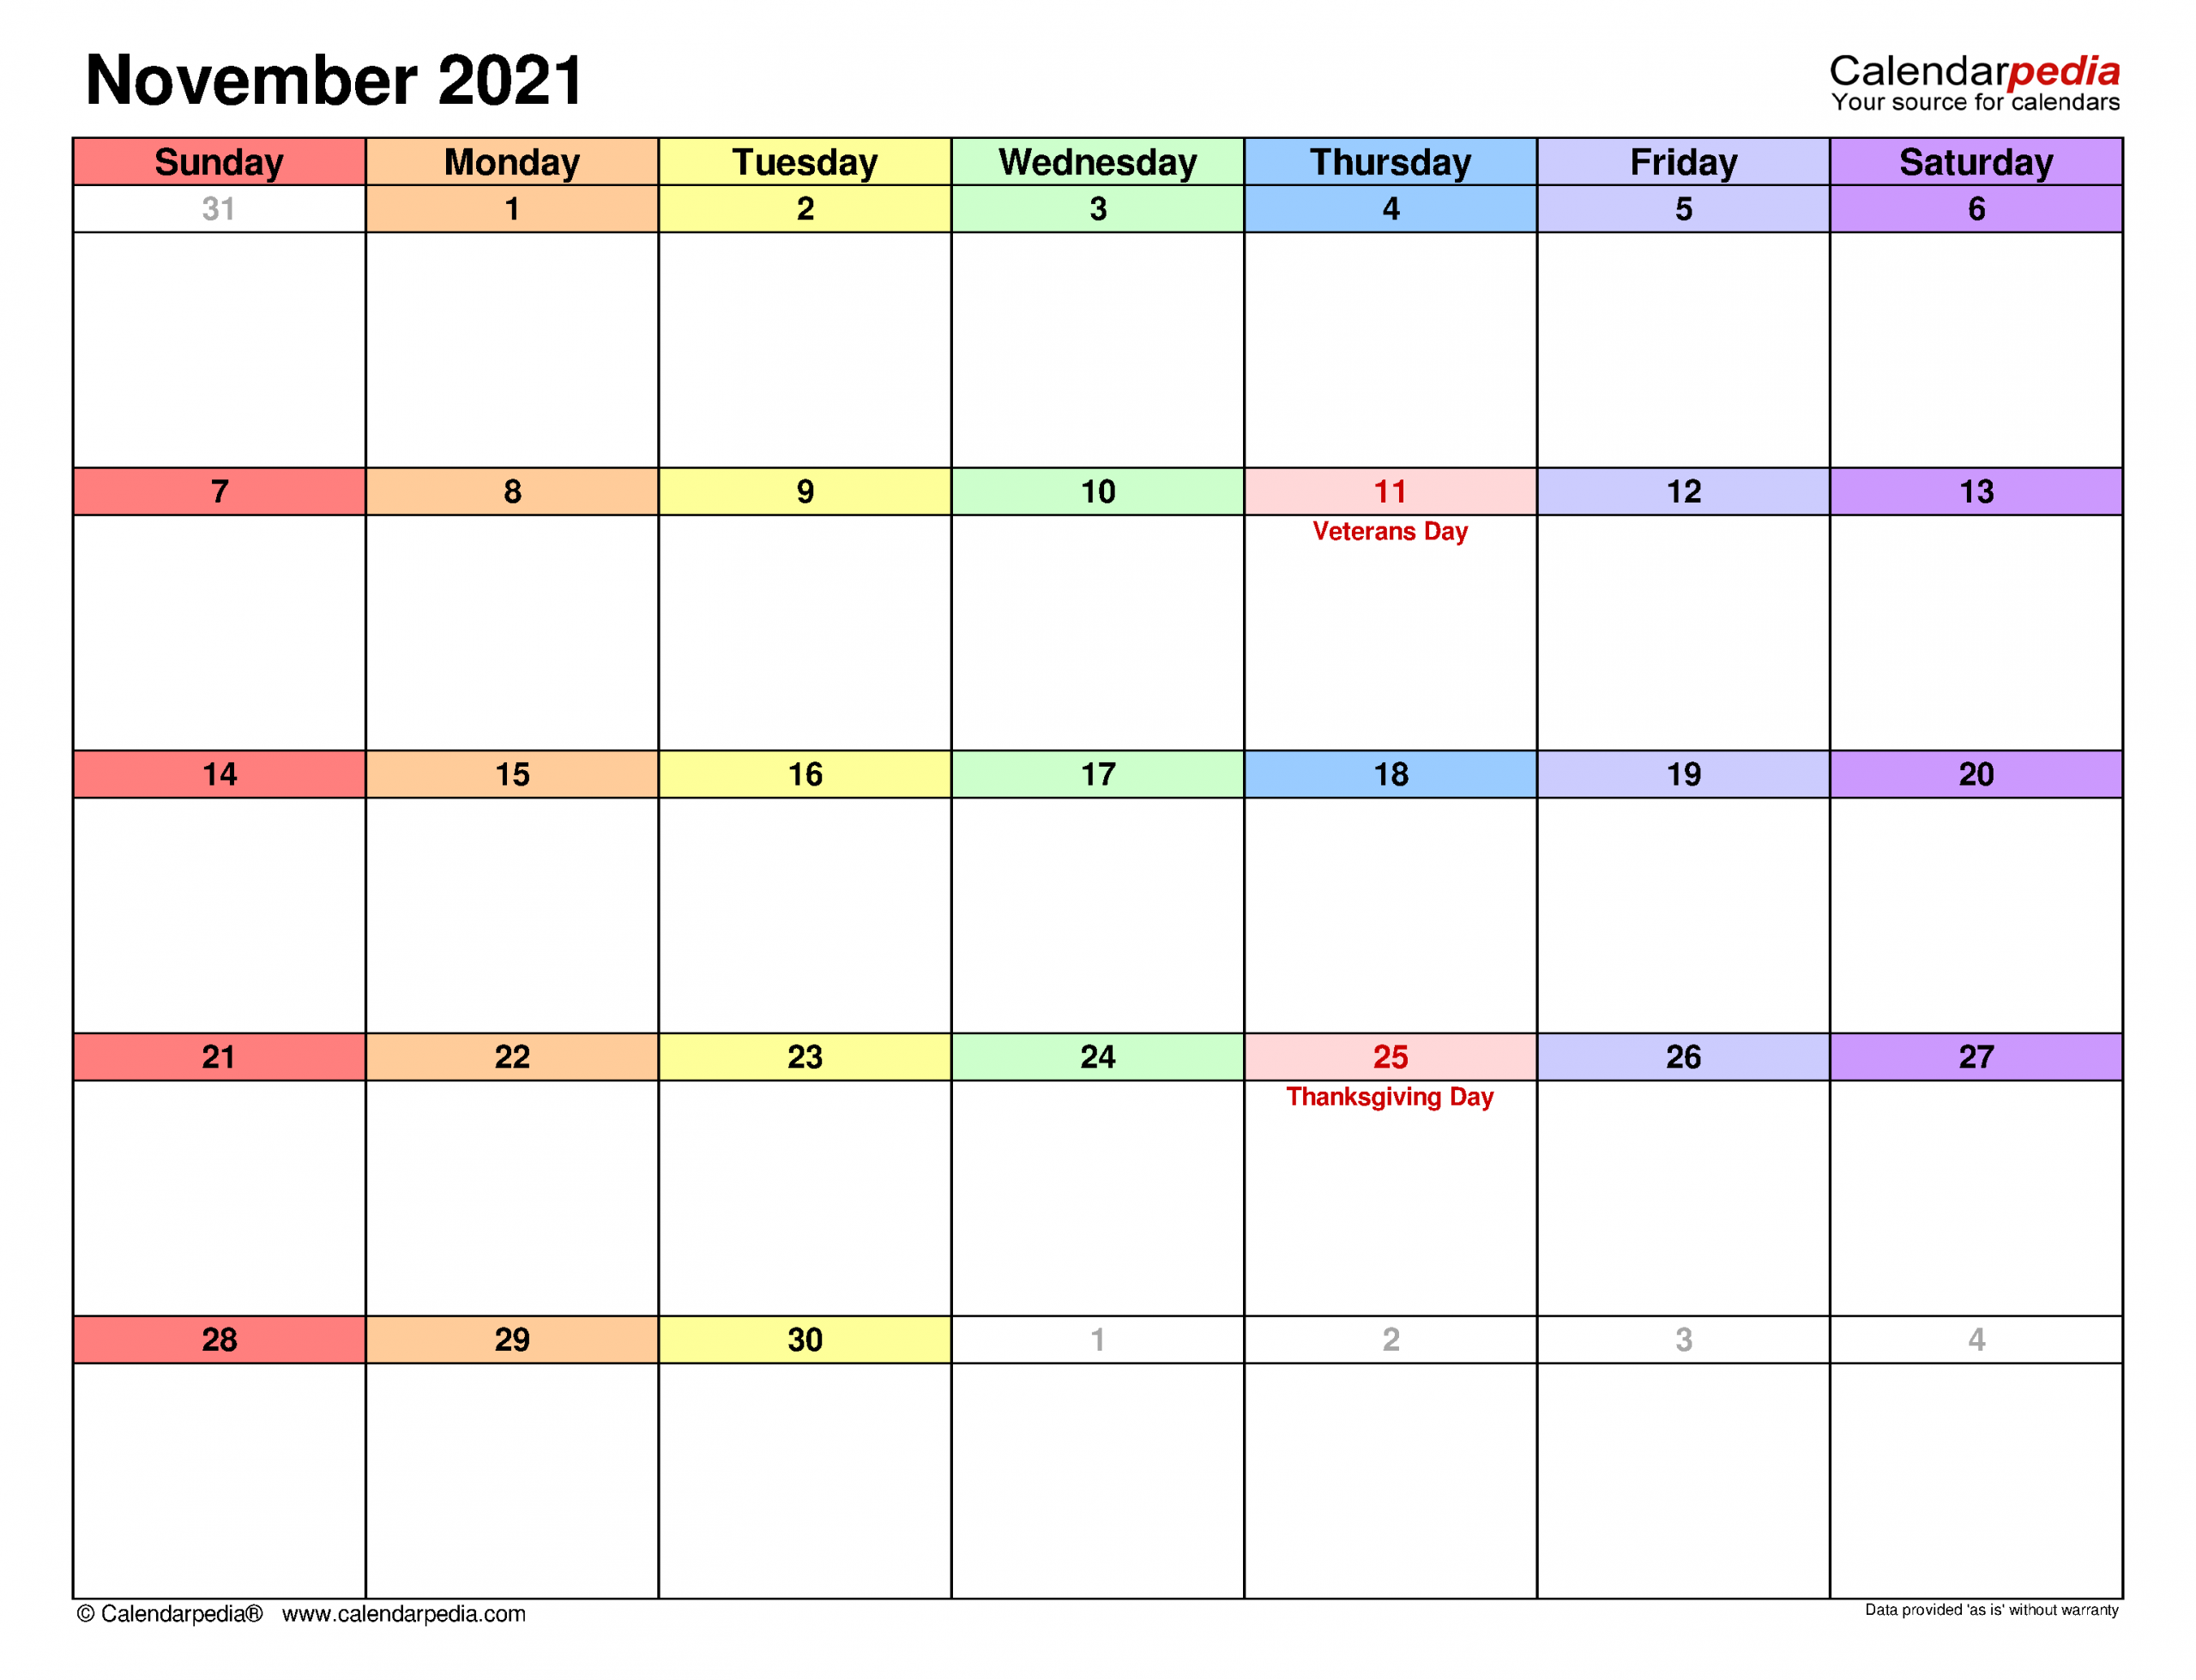 November 2021 Calendar | Templates For Word, Excel And Pdf Calendar Of November 2021